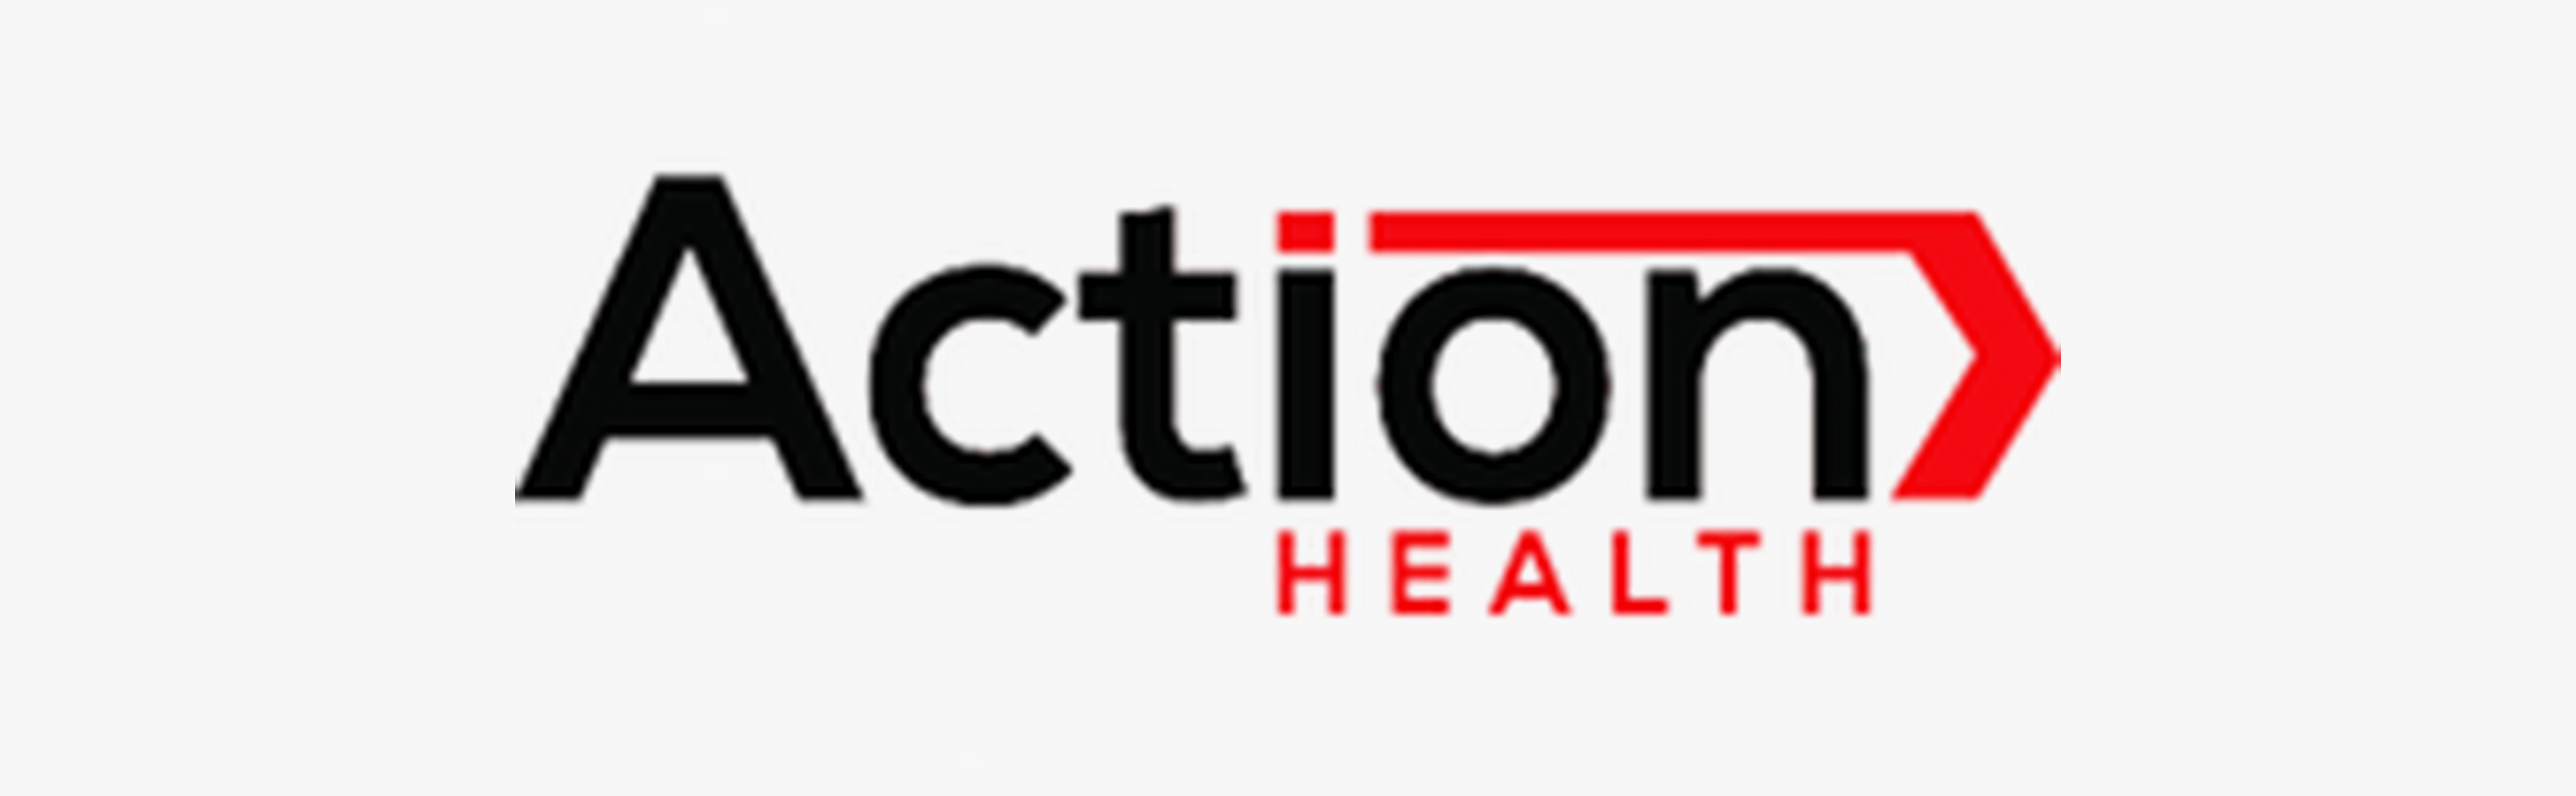 Action Health